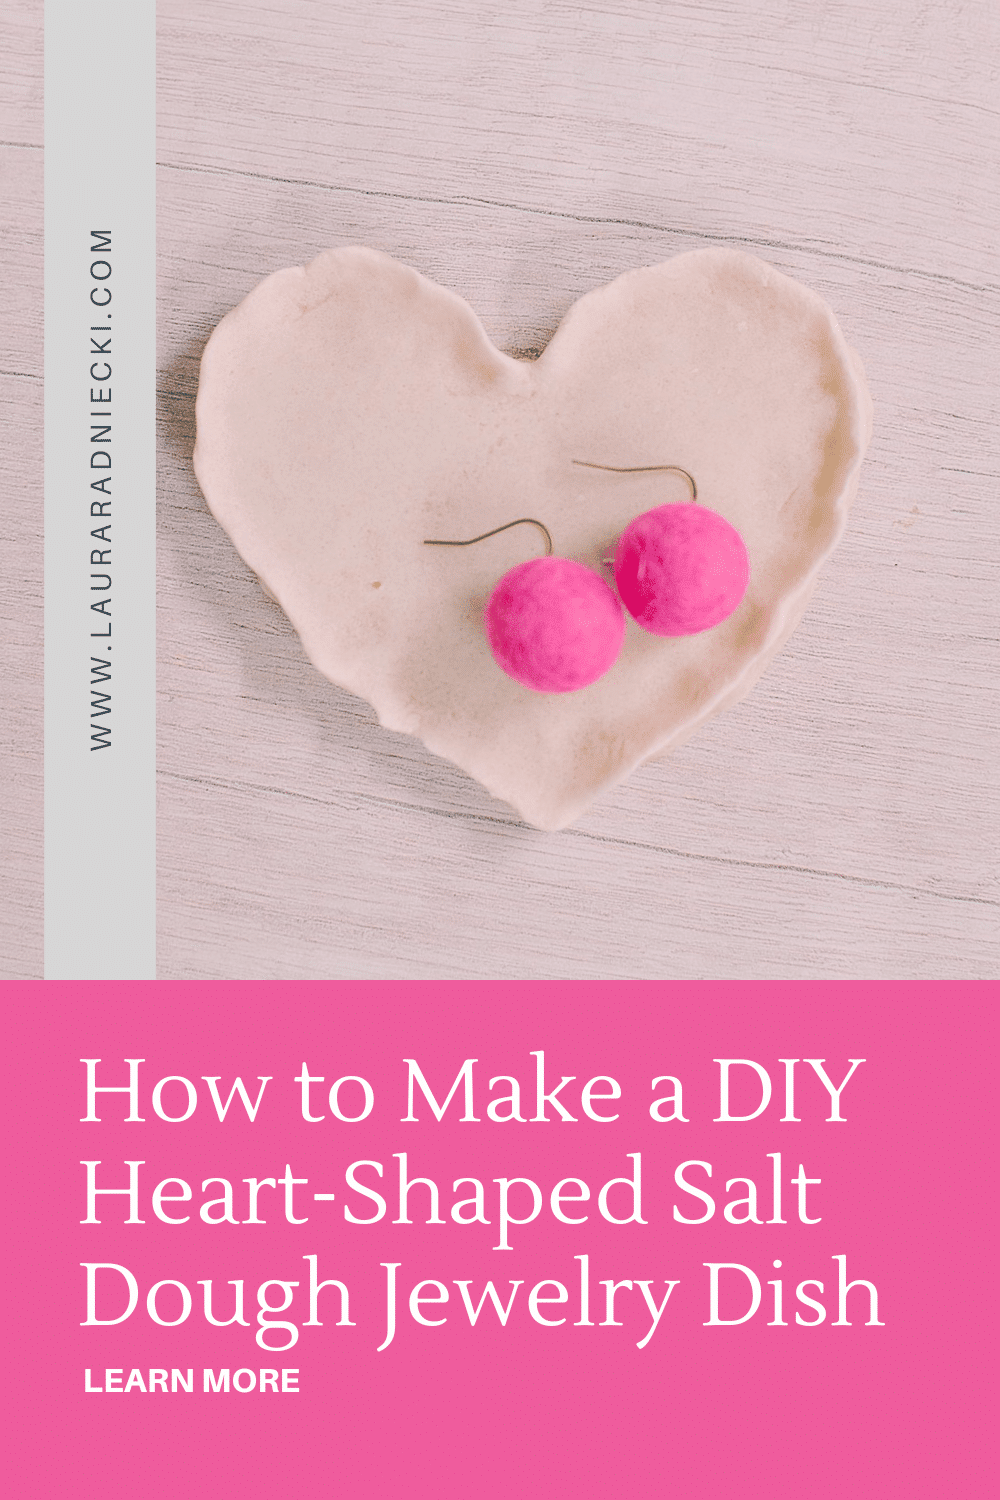 How to Make a Heart-Shaped Salt Dough Jewelry Dish